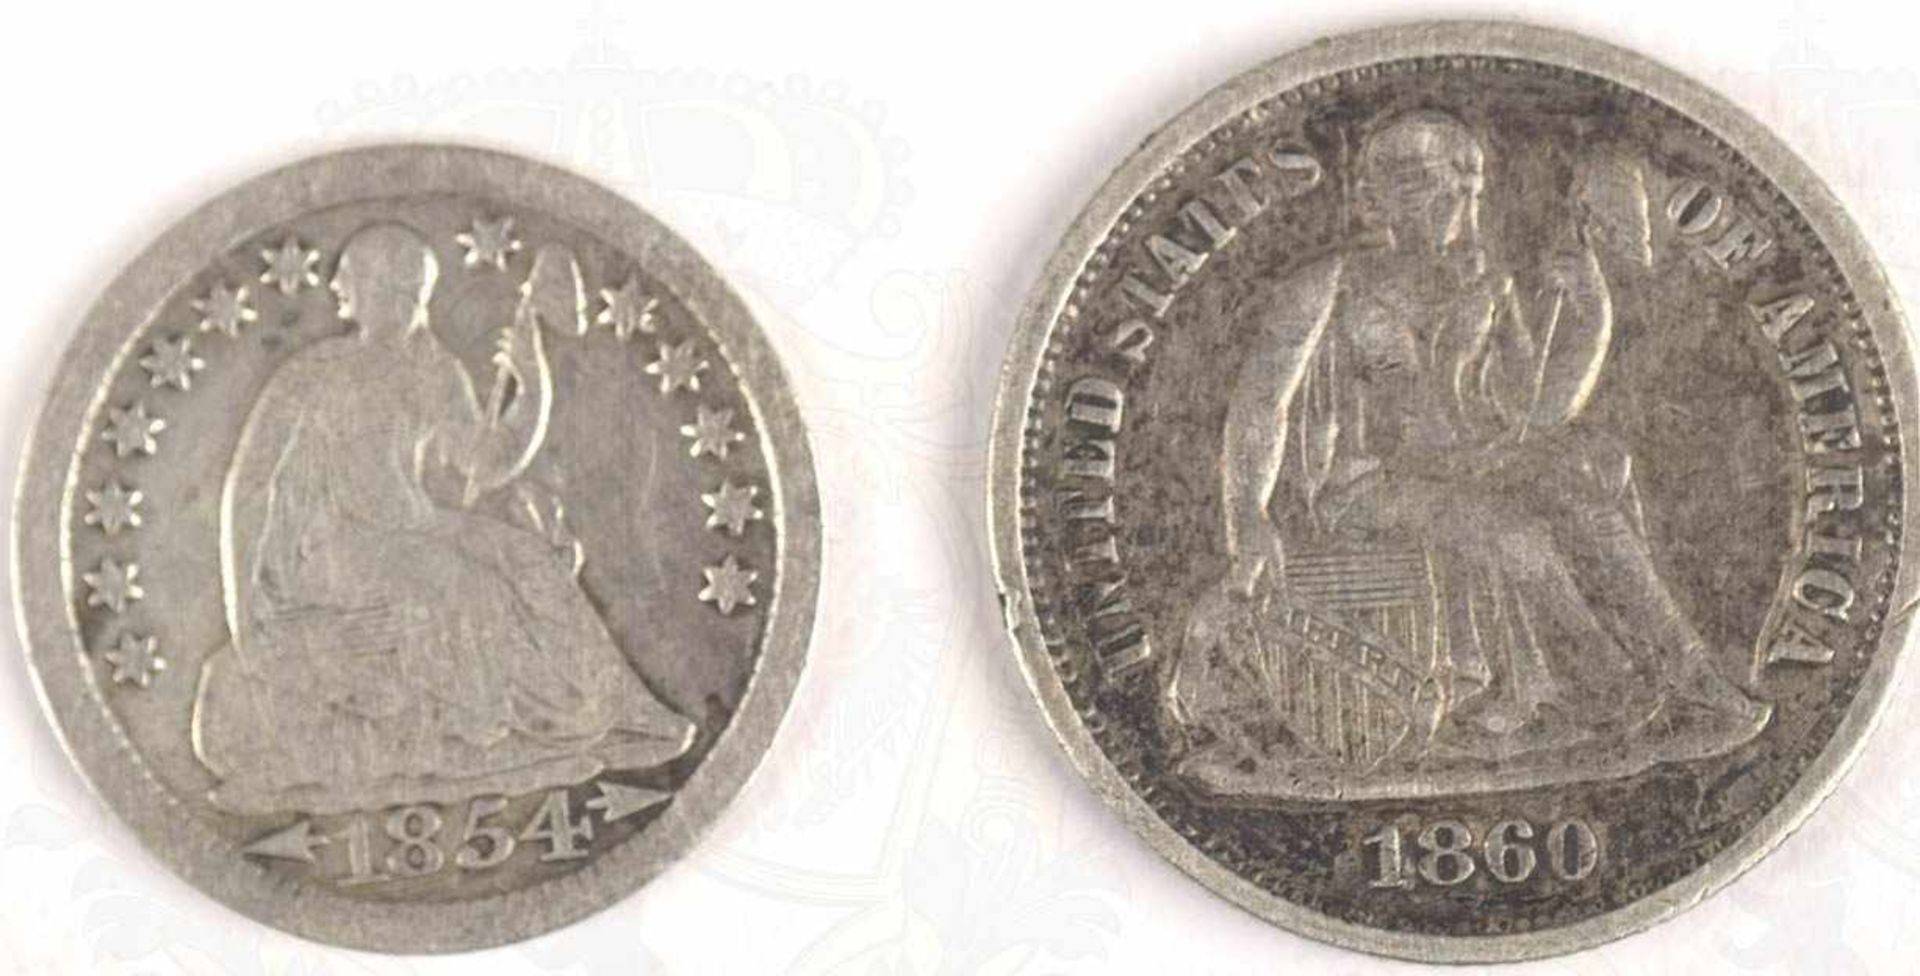 2 SILBERMÜNZEN USA, 1/2 Dime 1854 u. 1 Dime 1860, Seated Liberty, Silber, (5 cent bzw. 10 cent) - Image 2 of 2